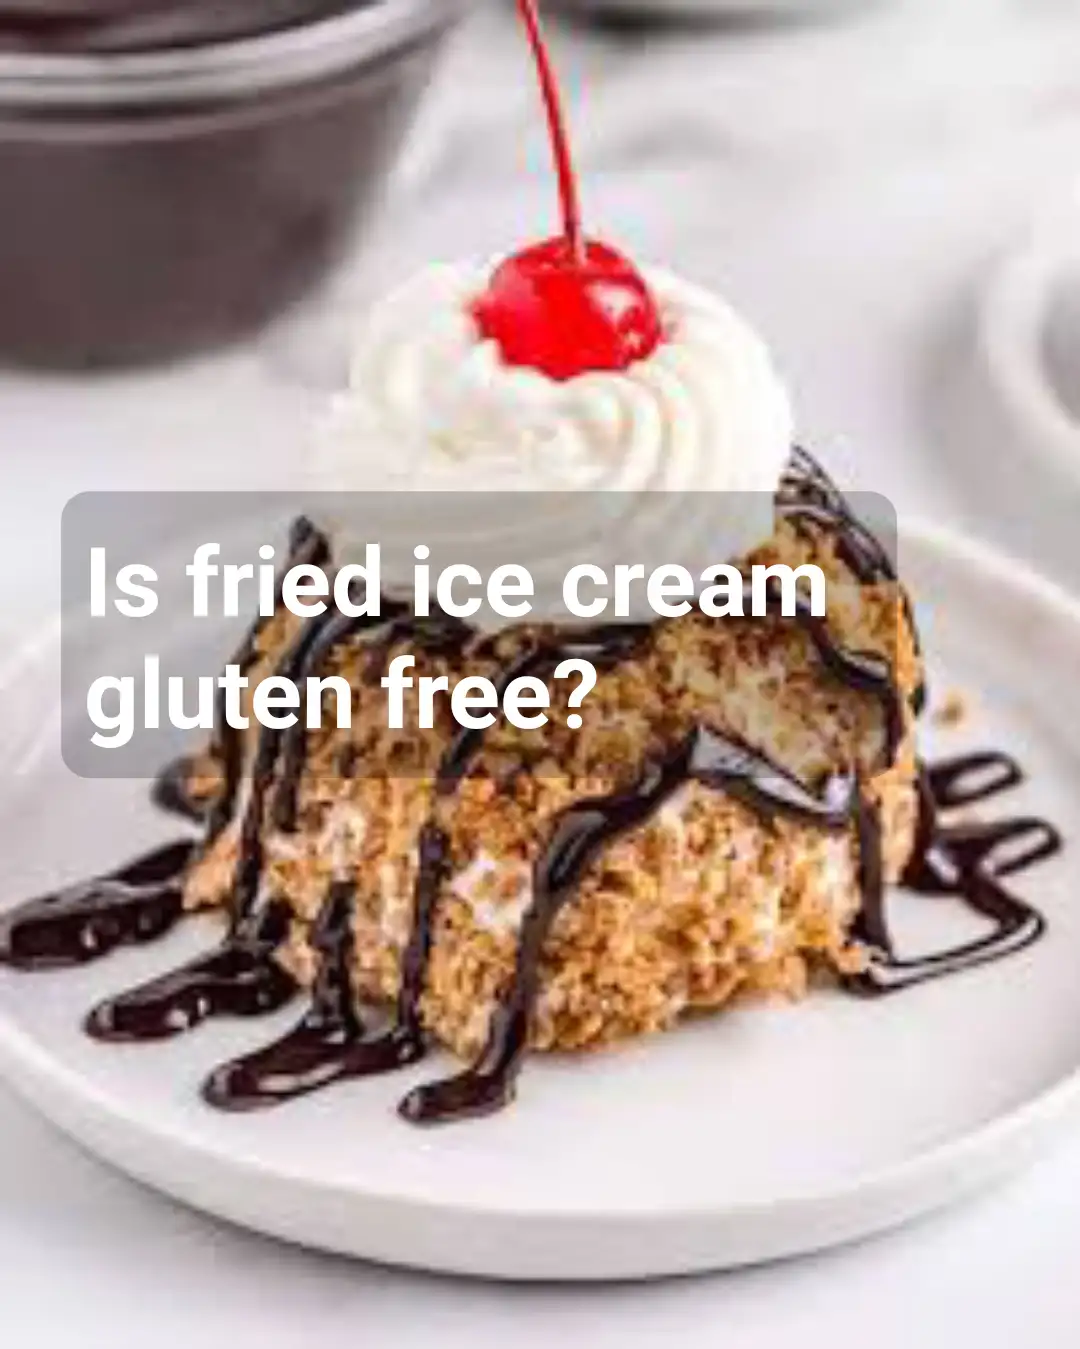 is fried ice cream gluten free